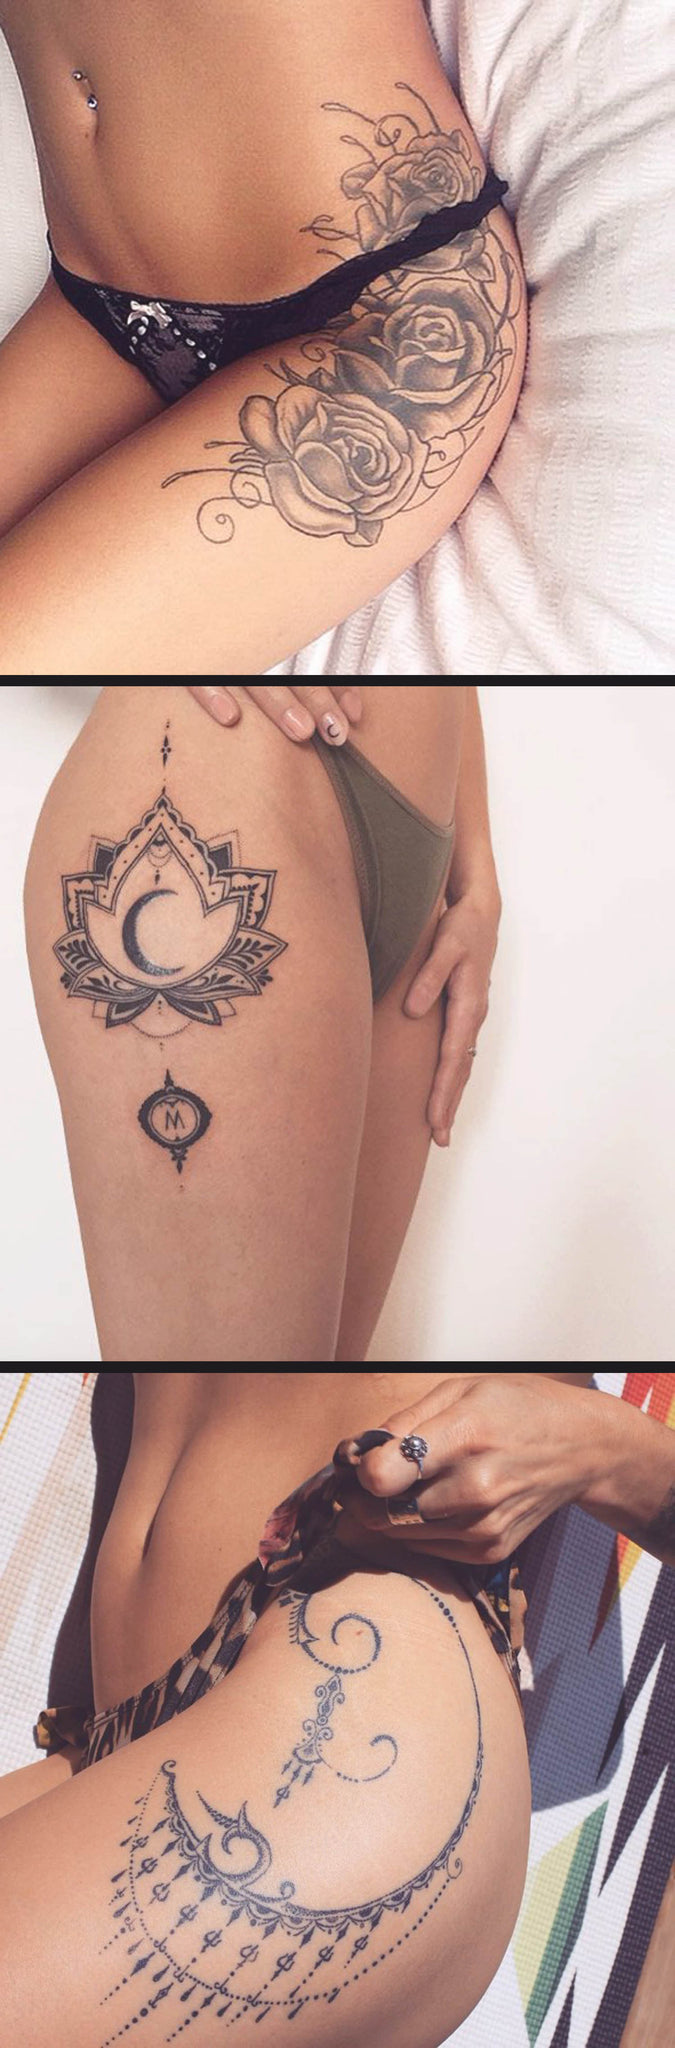 Tribal Black Thigh Tattoo Ideas for Women - Chandelier Moon Rose Lotus Hip Tat -  ideas tribales del tatuaje del muslo de la cadera - www.MyBodiArt.com